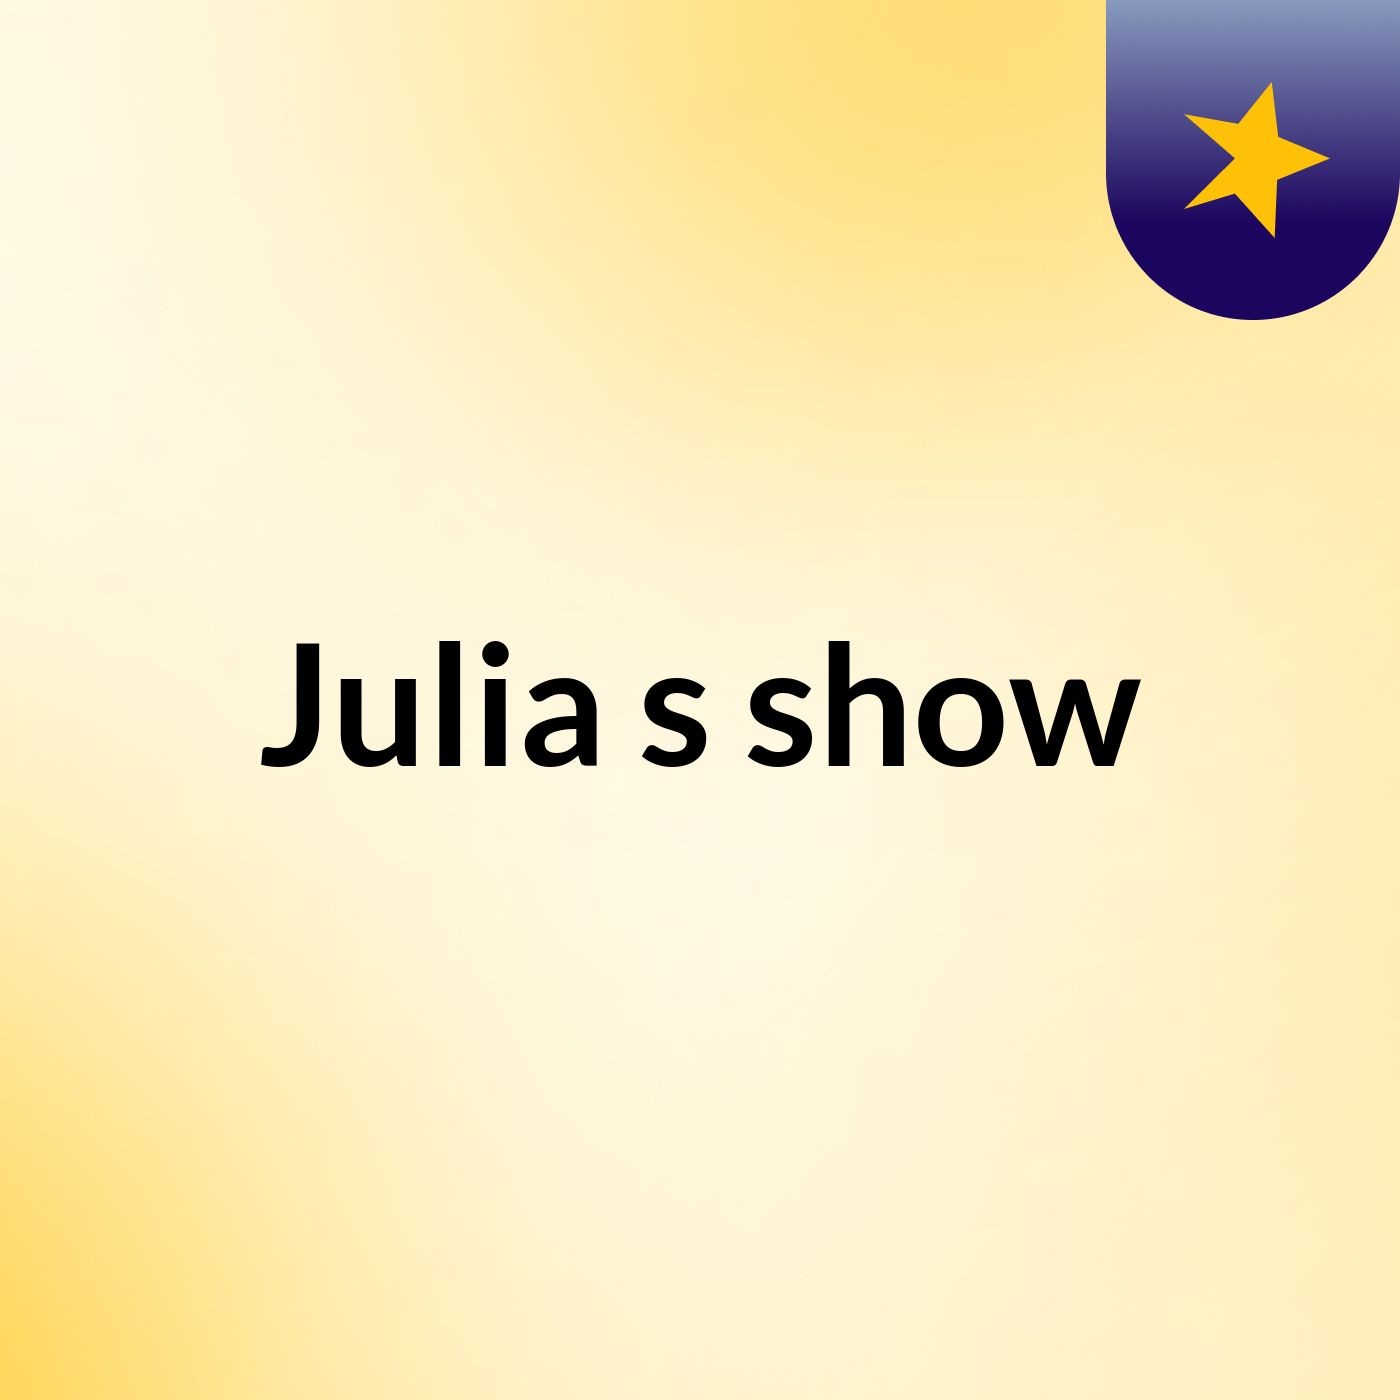 Julia's show